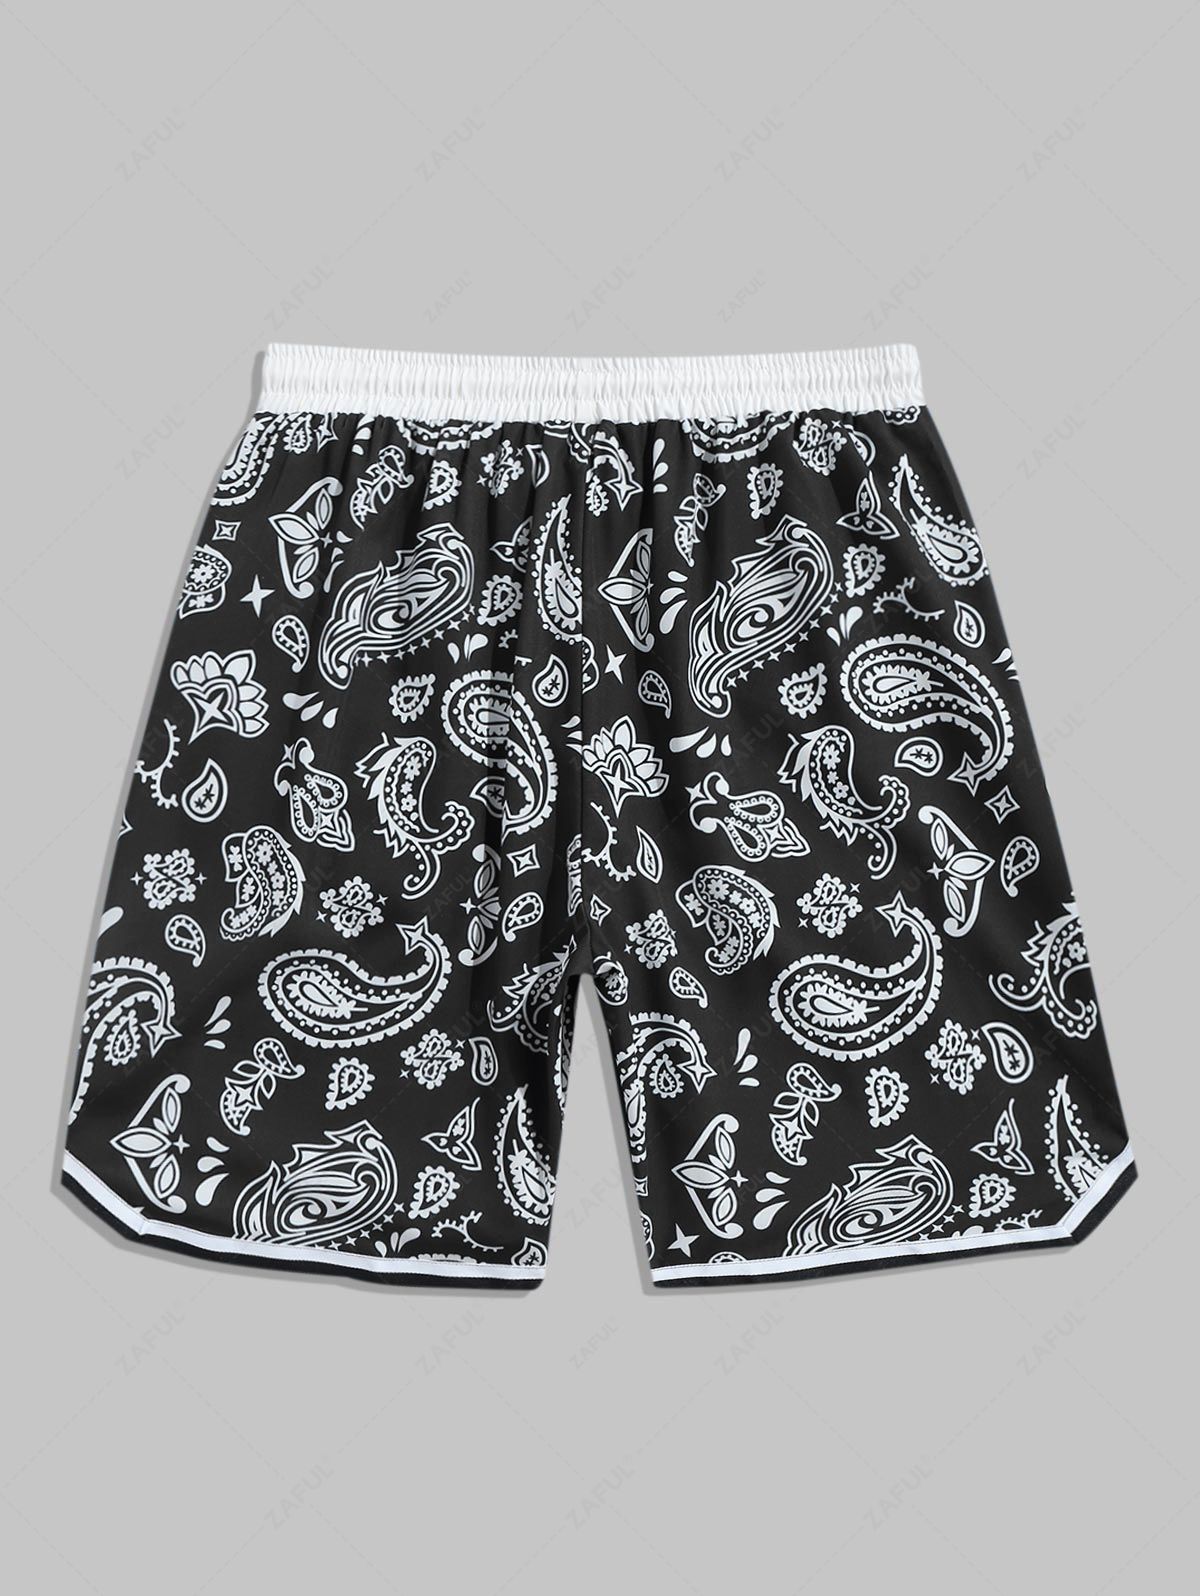  ZAFUL Men's Vintage Ethnic Paisley Floral Print Drawstring Summer Beach Vacation Shorts